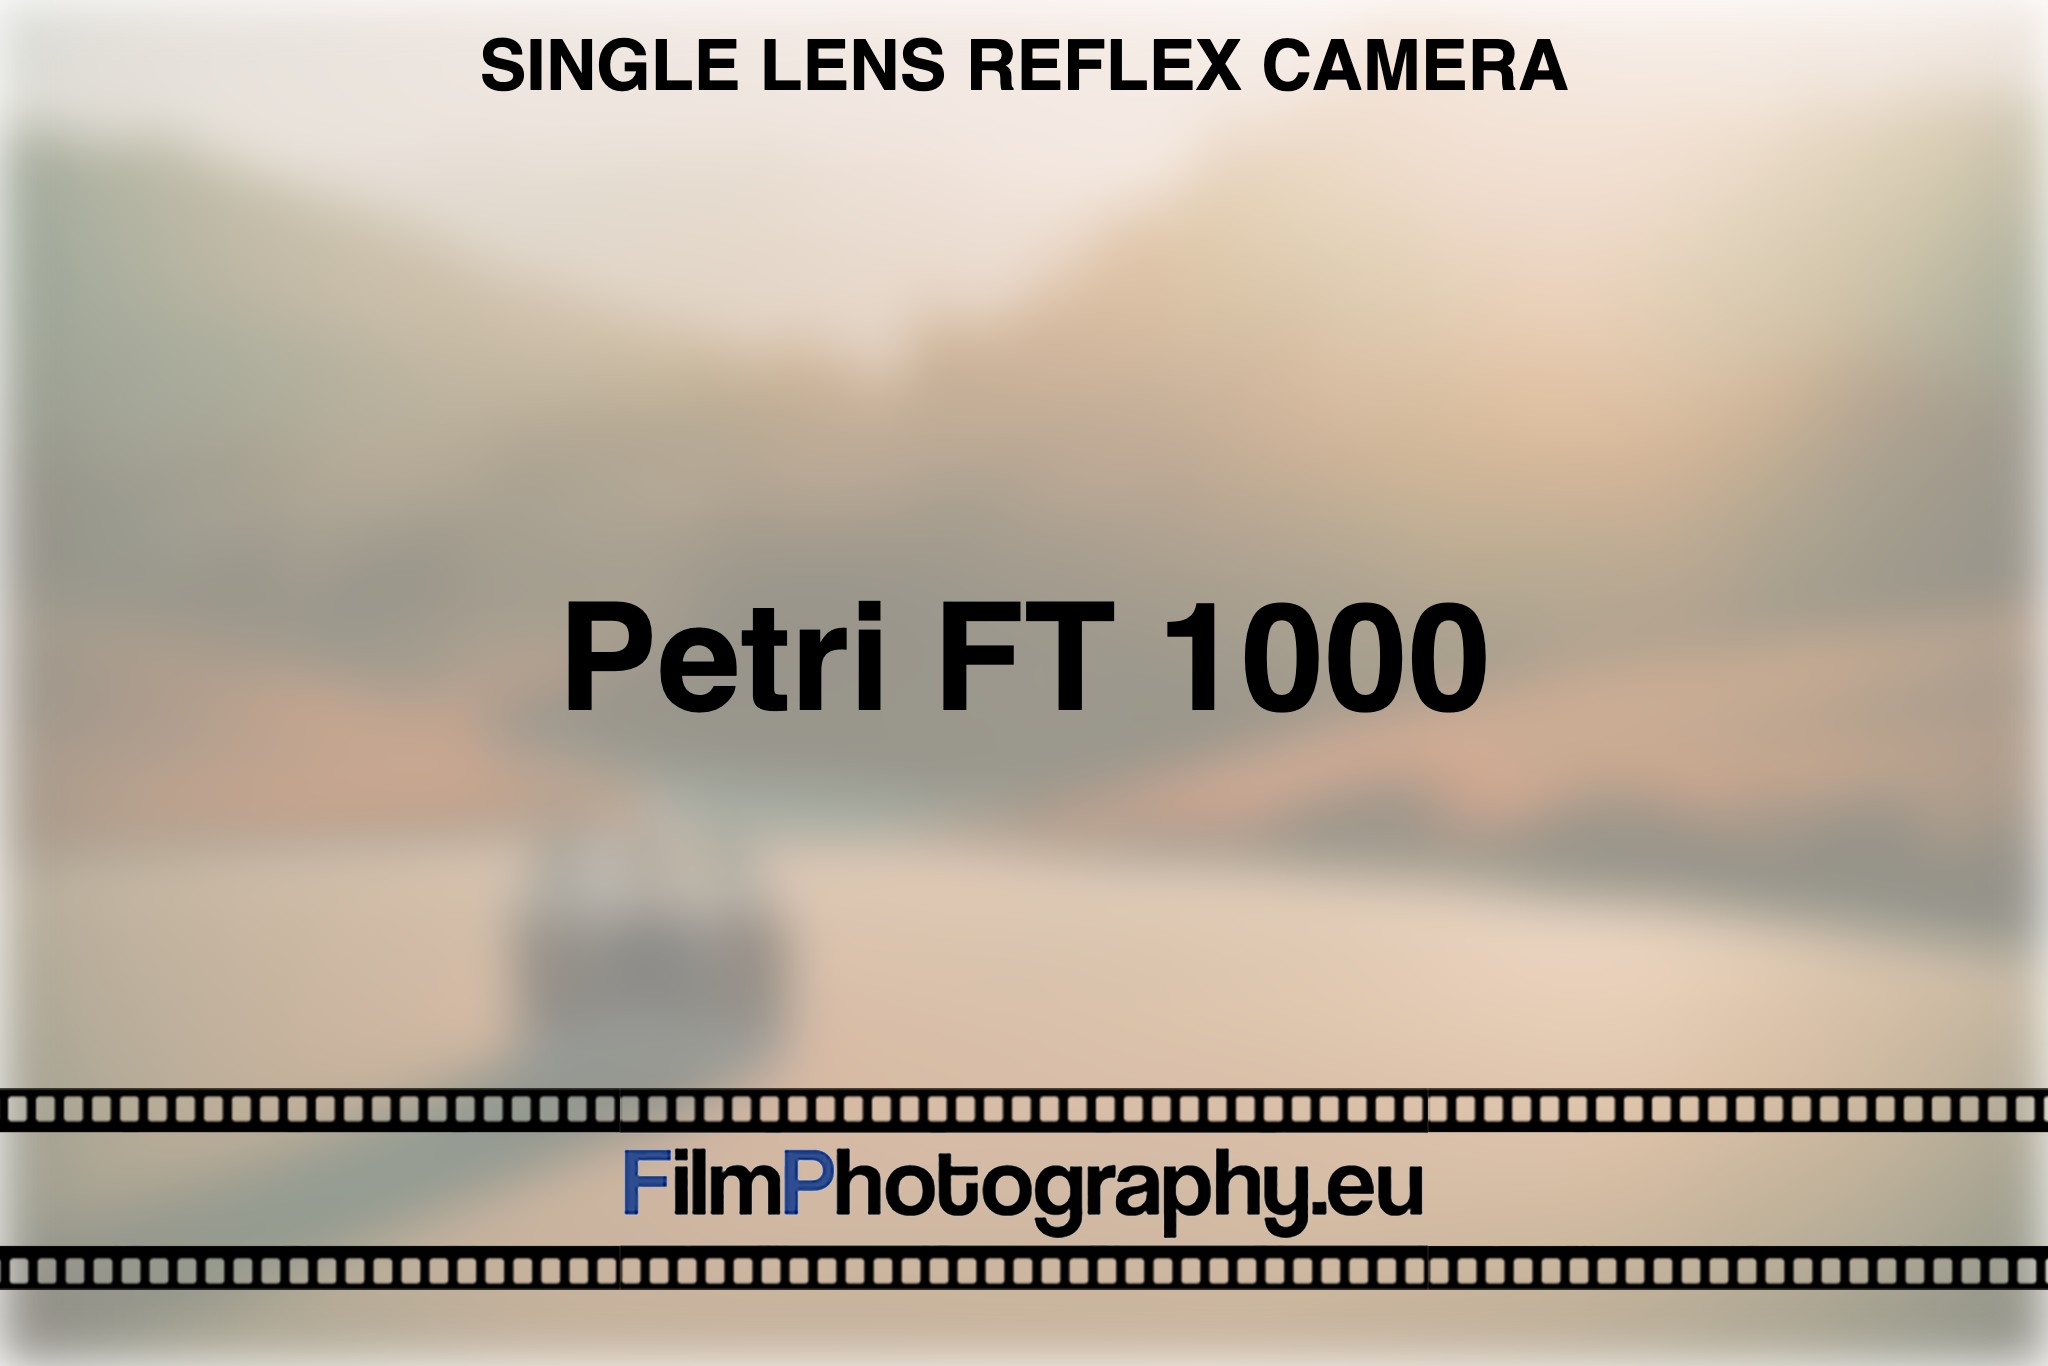 petri-ft-1000-single-lens-reflex-camera-bnv